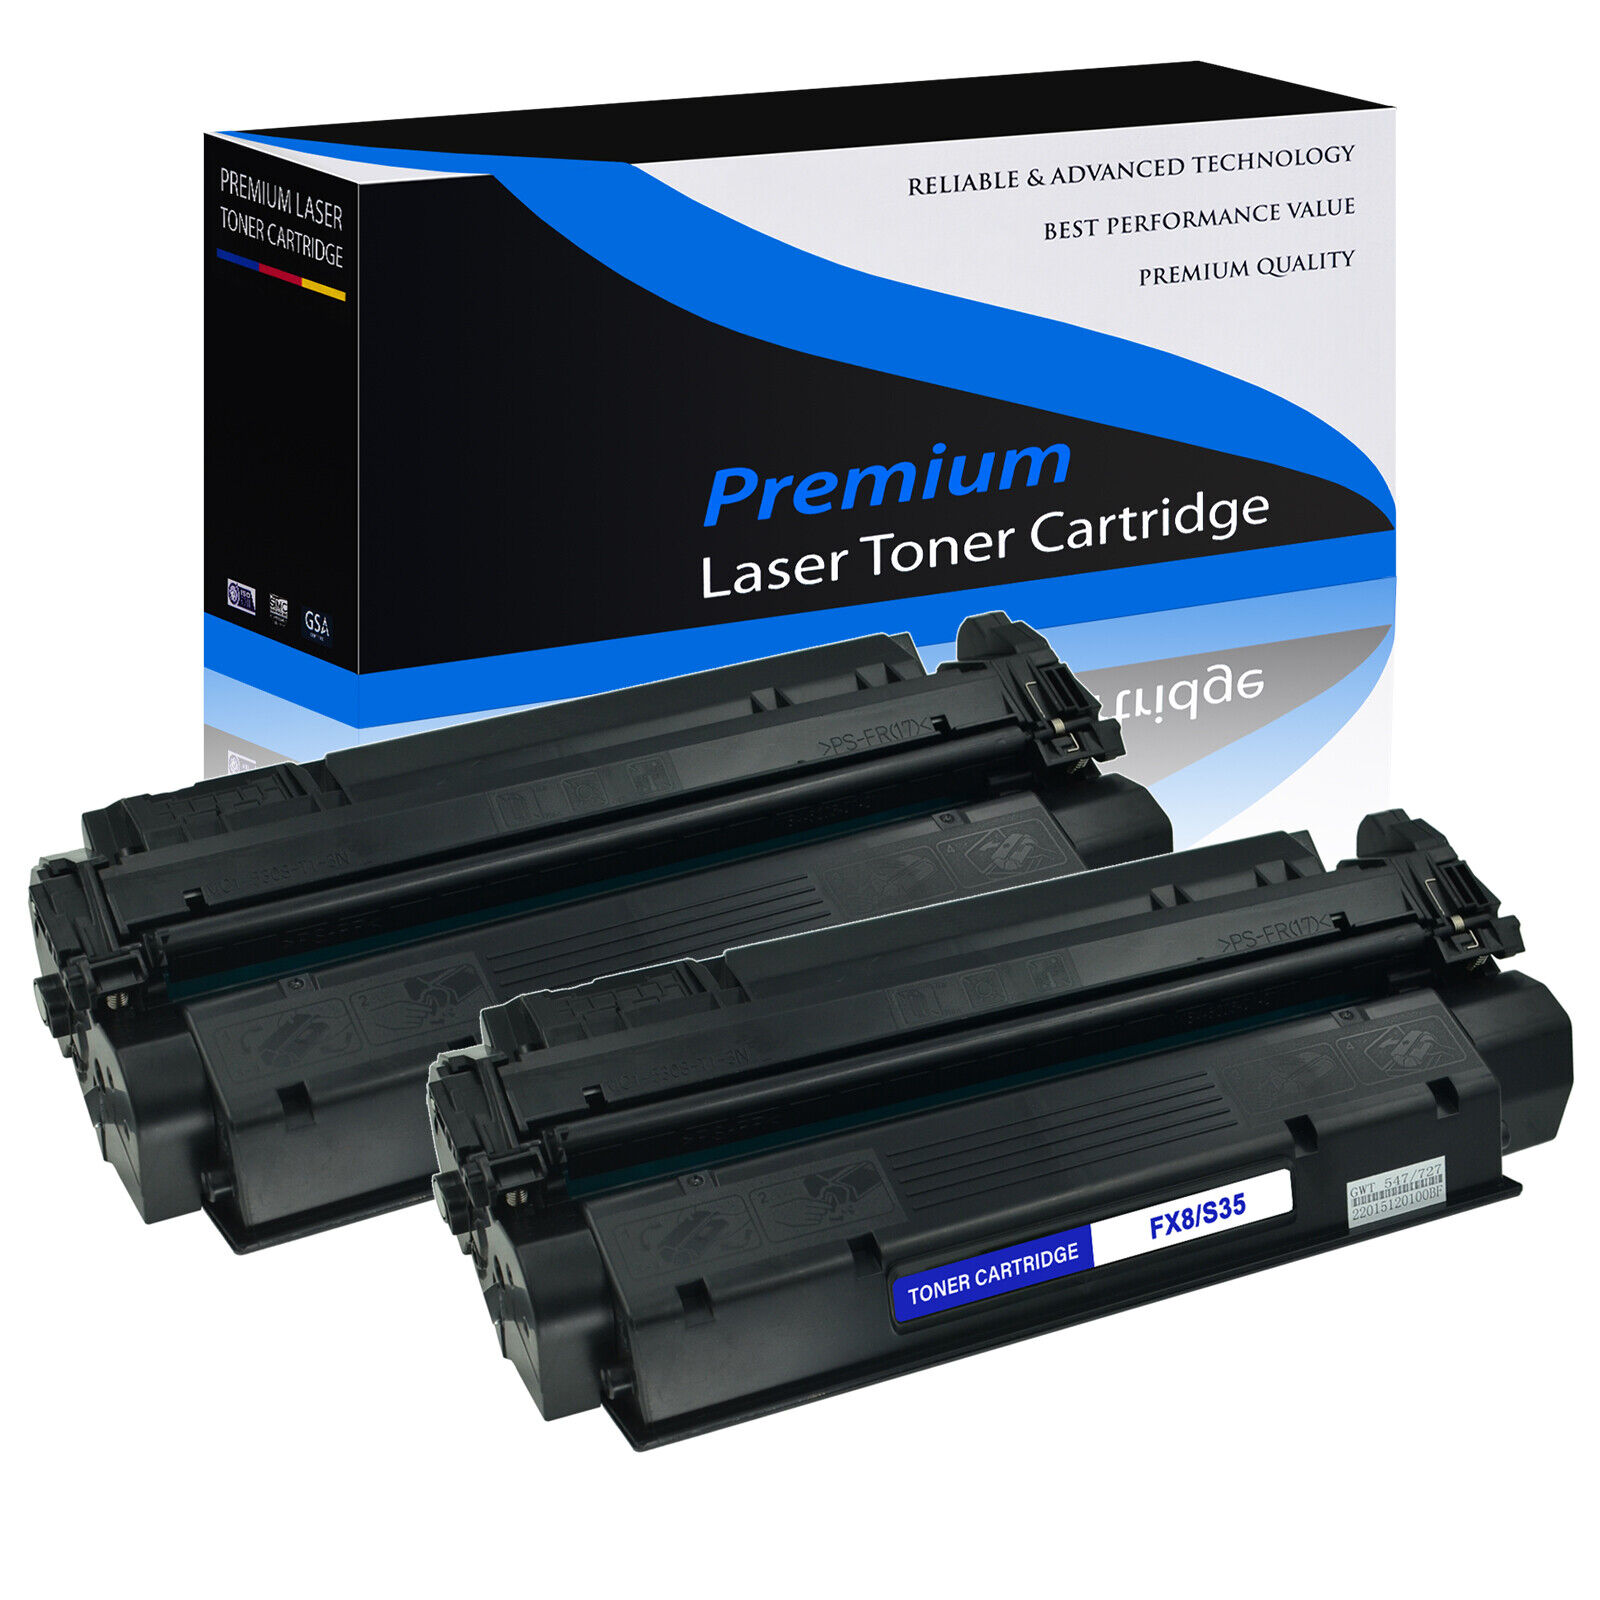 2PK Black S35 Toner Cartridge for Canon Image Class D320 D340 D383 Printers